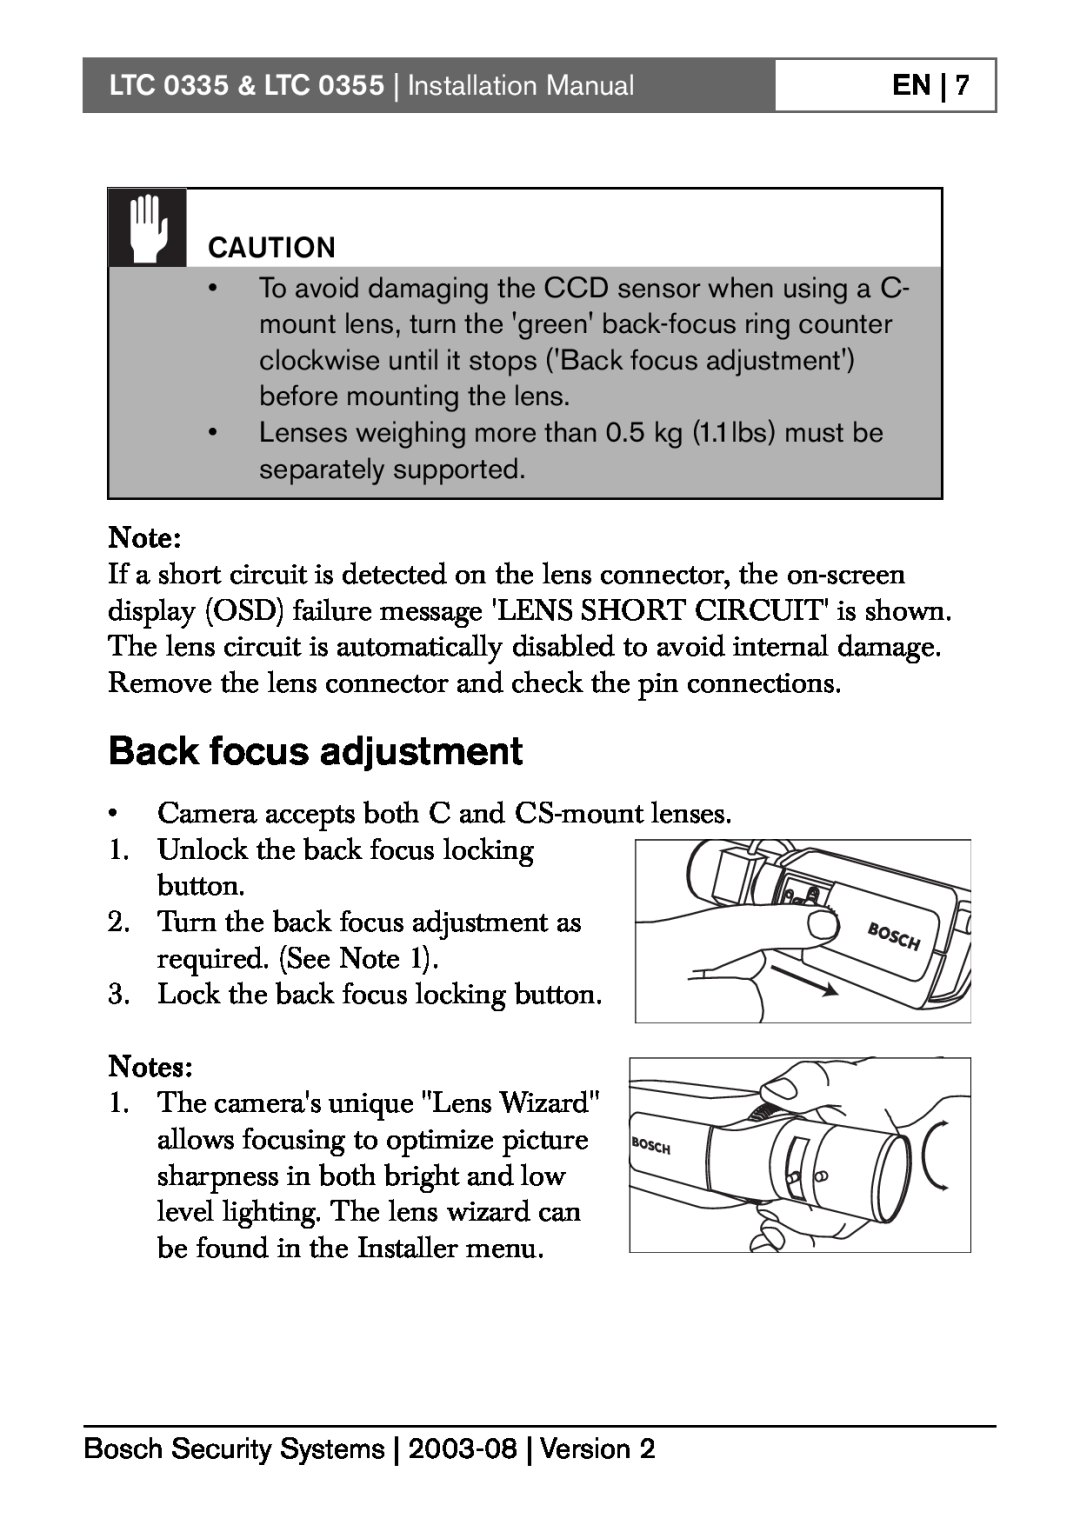 Bosch Appliances installation manual Back focus adjustment, LTC 0335 & LTC 0355 Installation Manual 